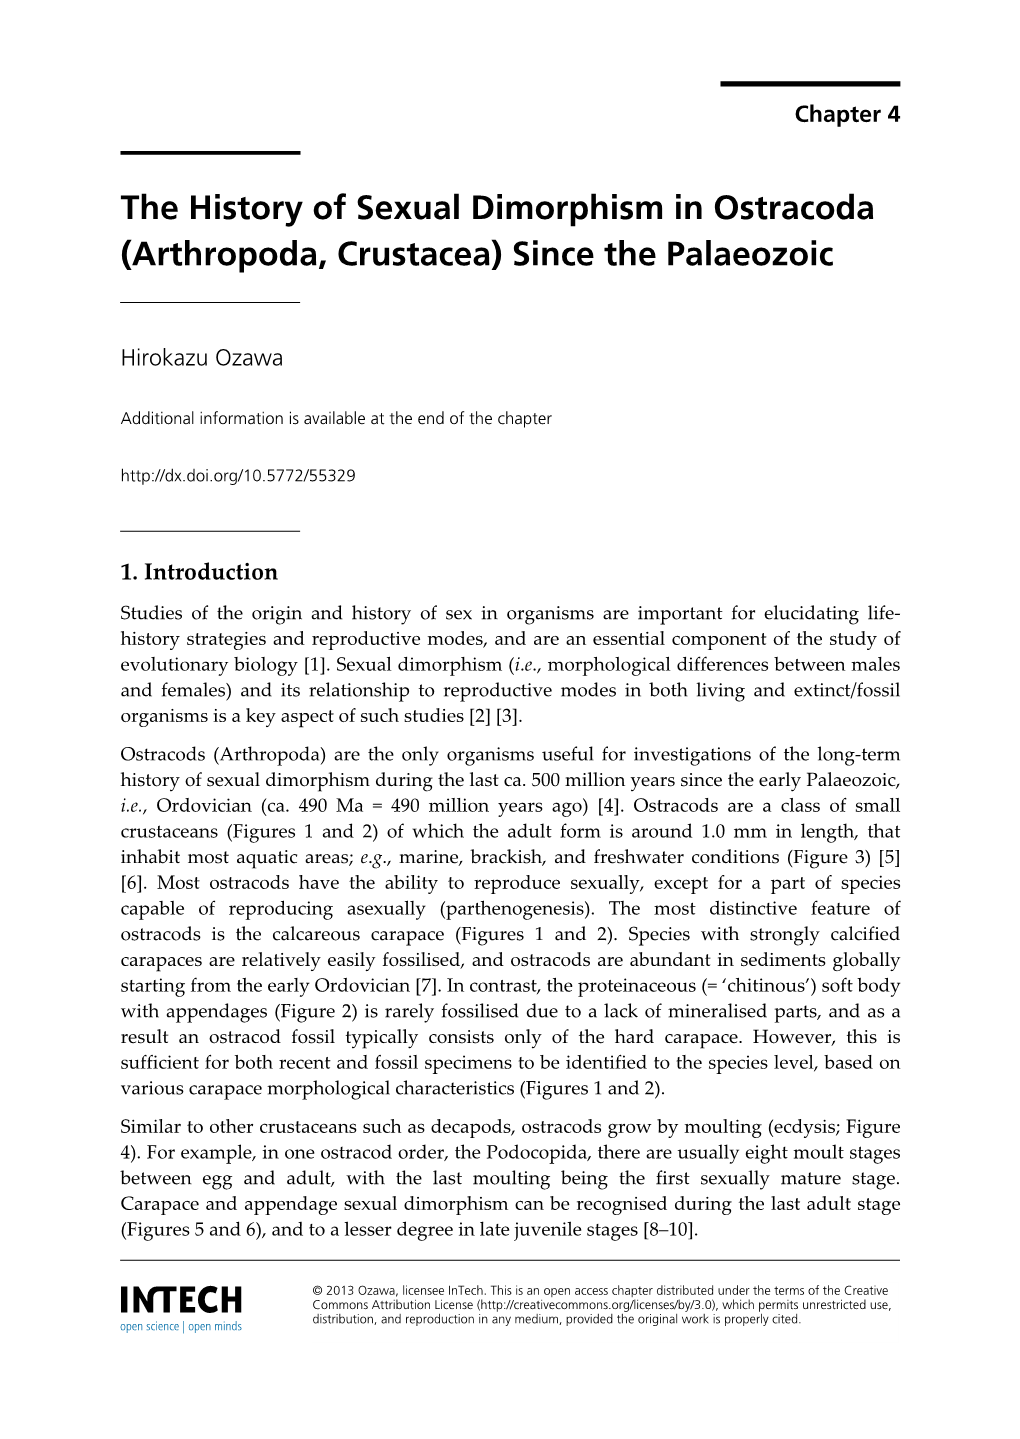 The History of Sexual Dimorphism in Ostracoda (Arthropoda, Crustacea) Since the Palaeozoic